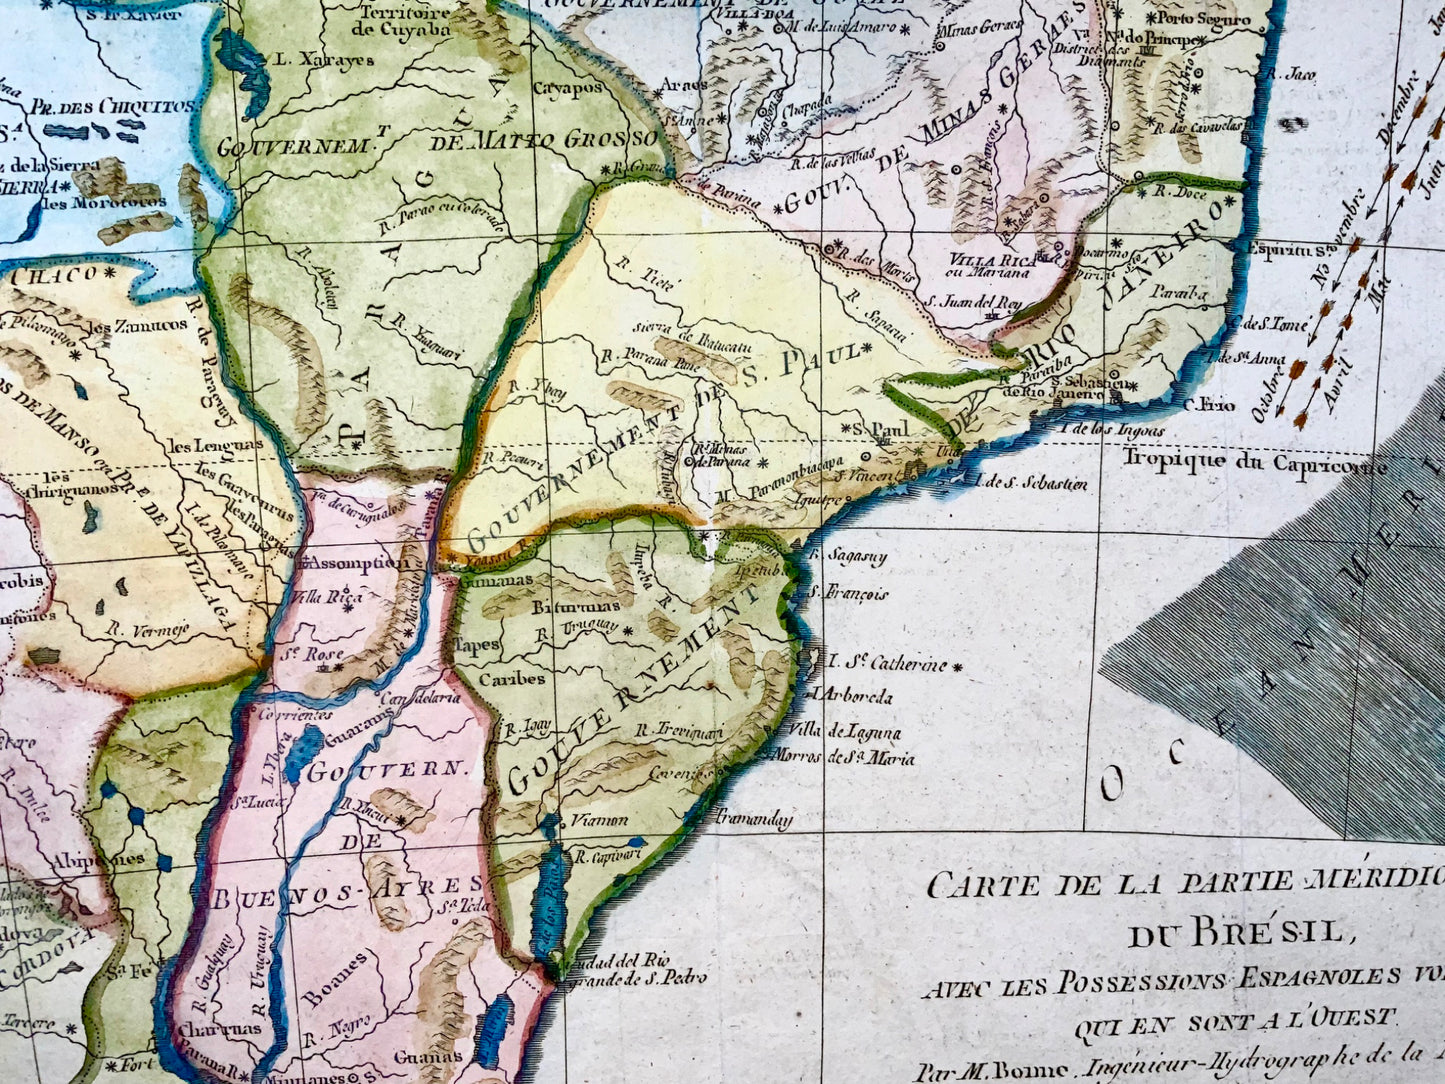 1780 Brasile, Brésil, possedimenti spagnoli, Bonne, mappa incisa a mano